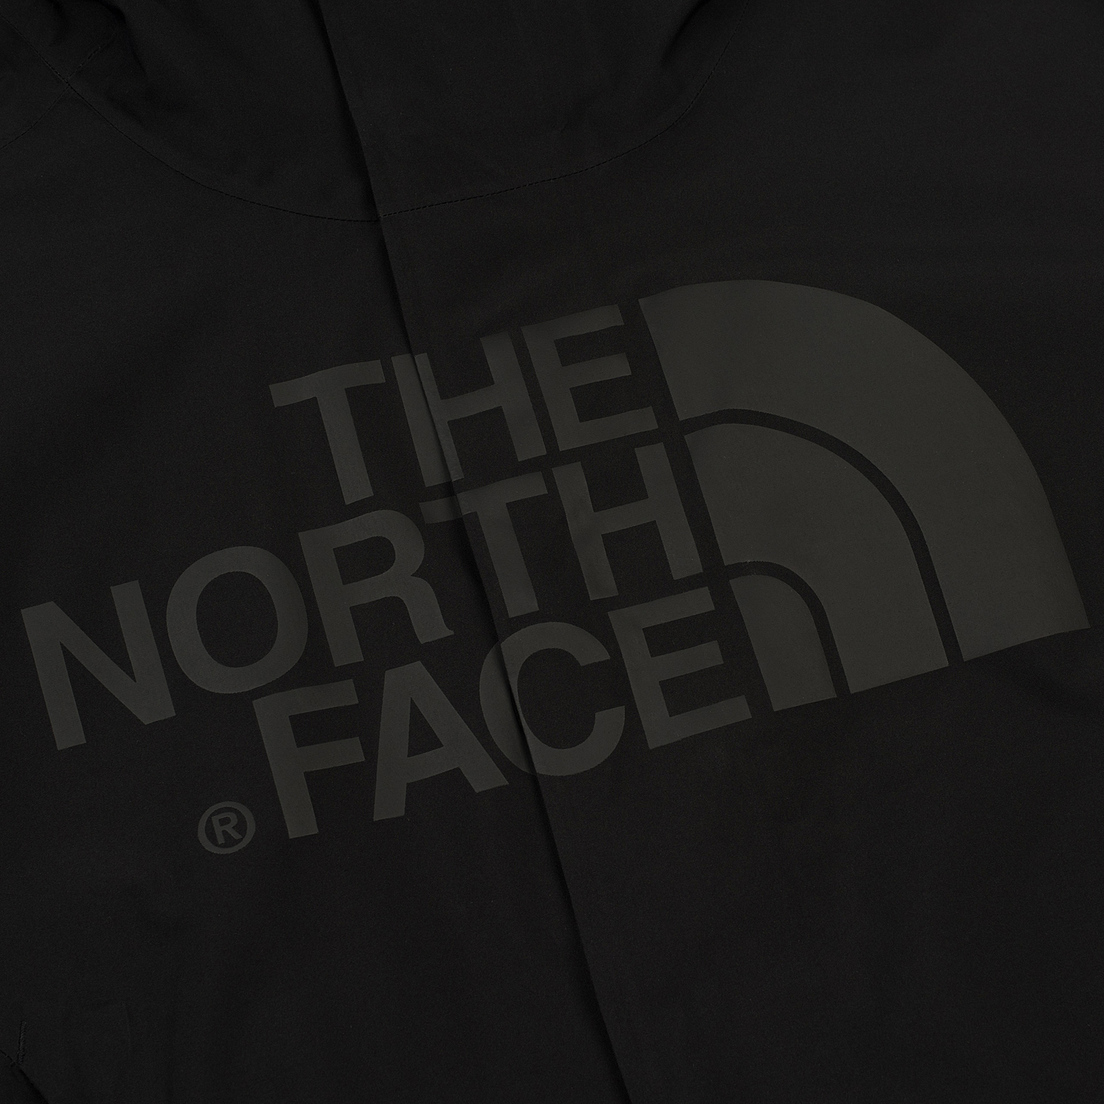 The North Face Мужская куртка ветровка Drew Peak